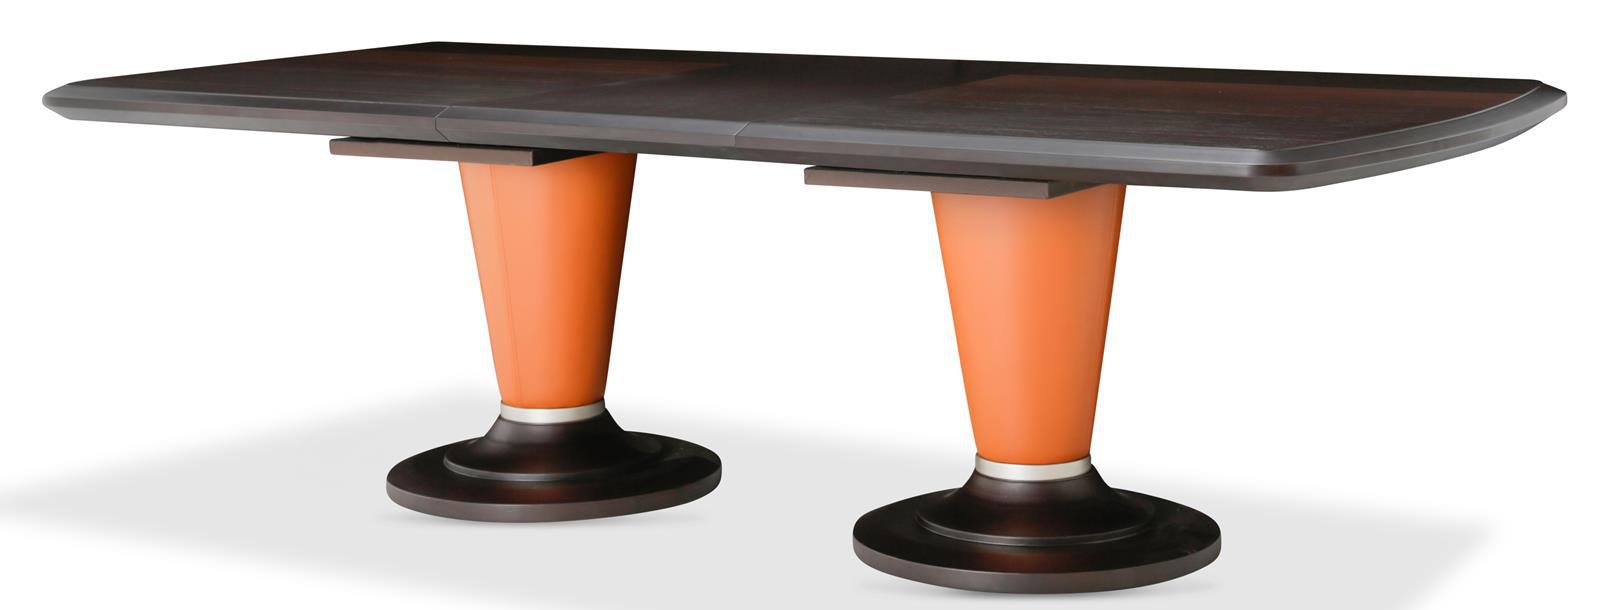 21 Cosmopolitan Rectangular Dining Table Top in Orange/Umber